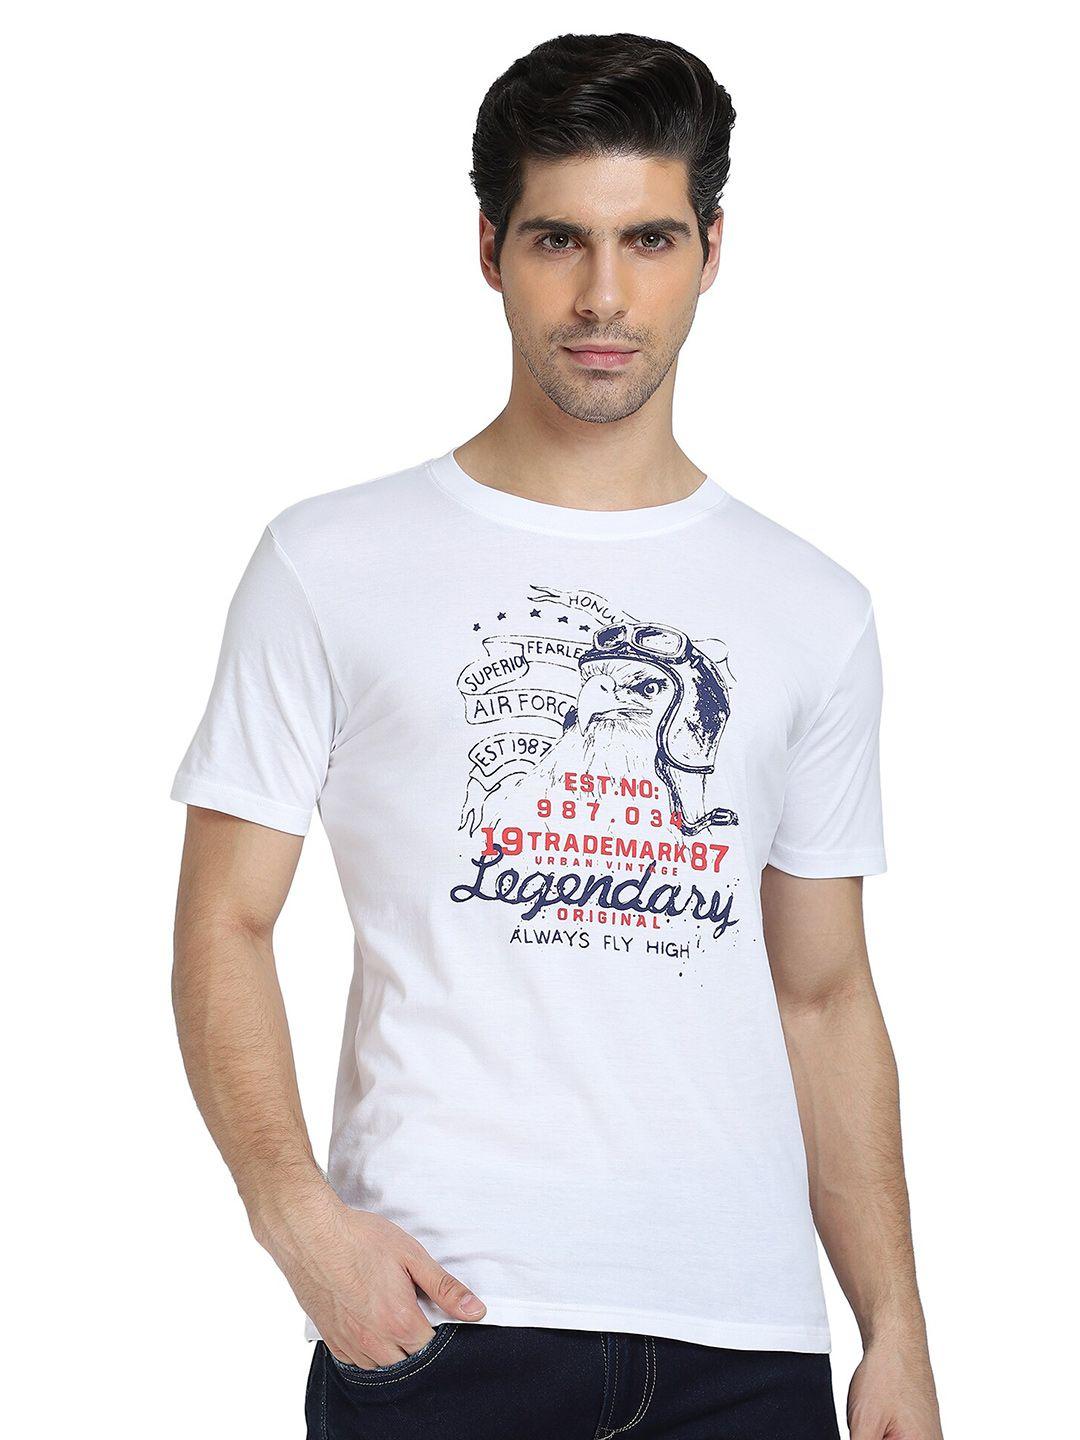 dyca men white & bright gray typography printed t-shirt